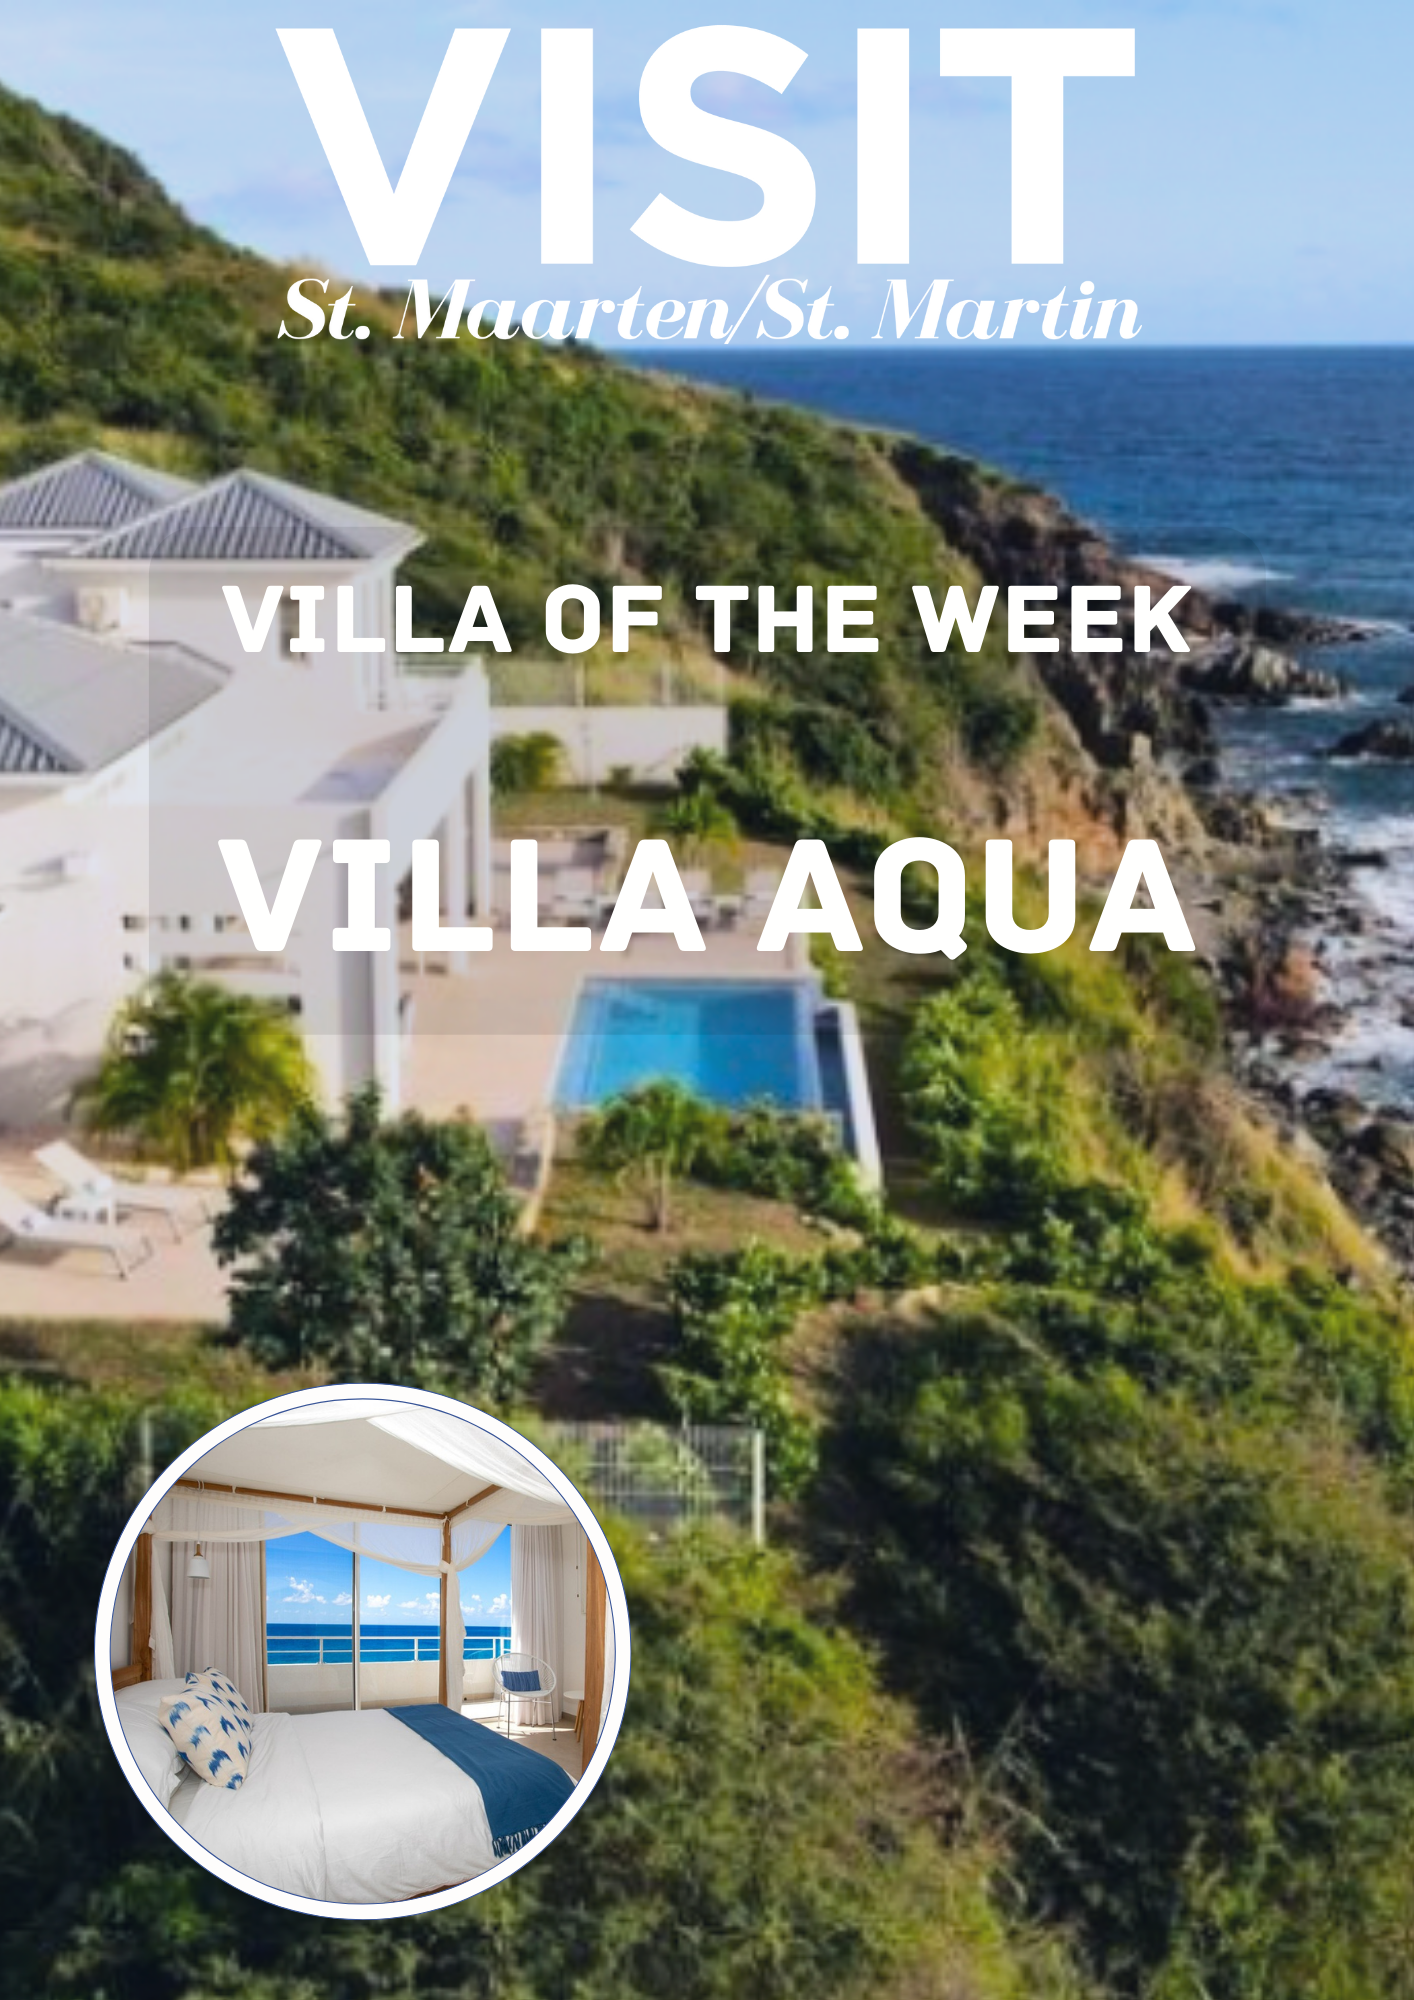 Villa Aqua, Real Estate St Maarten, Where to stay on Sint Maarten